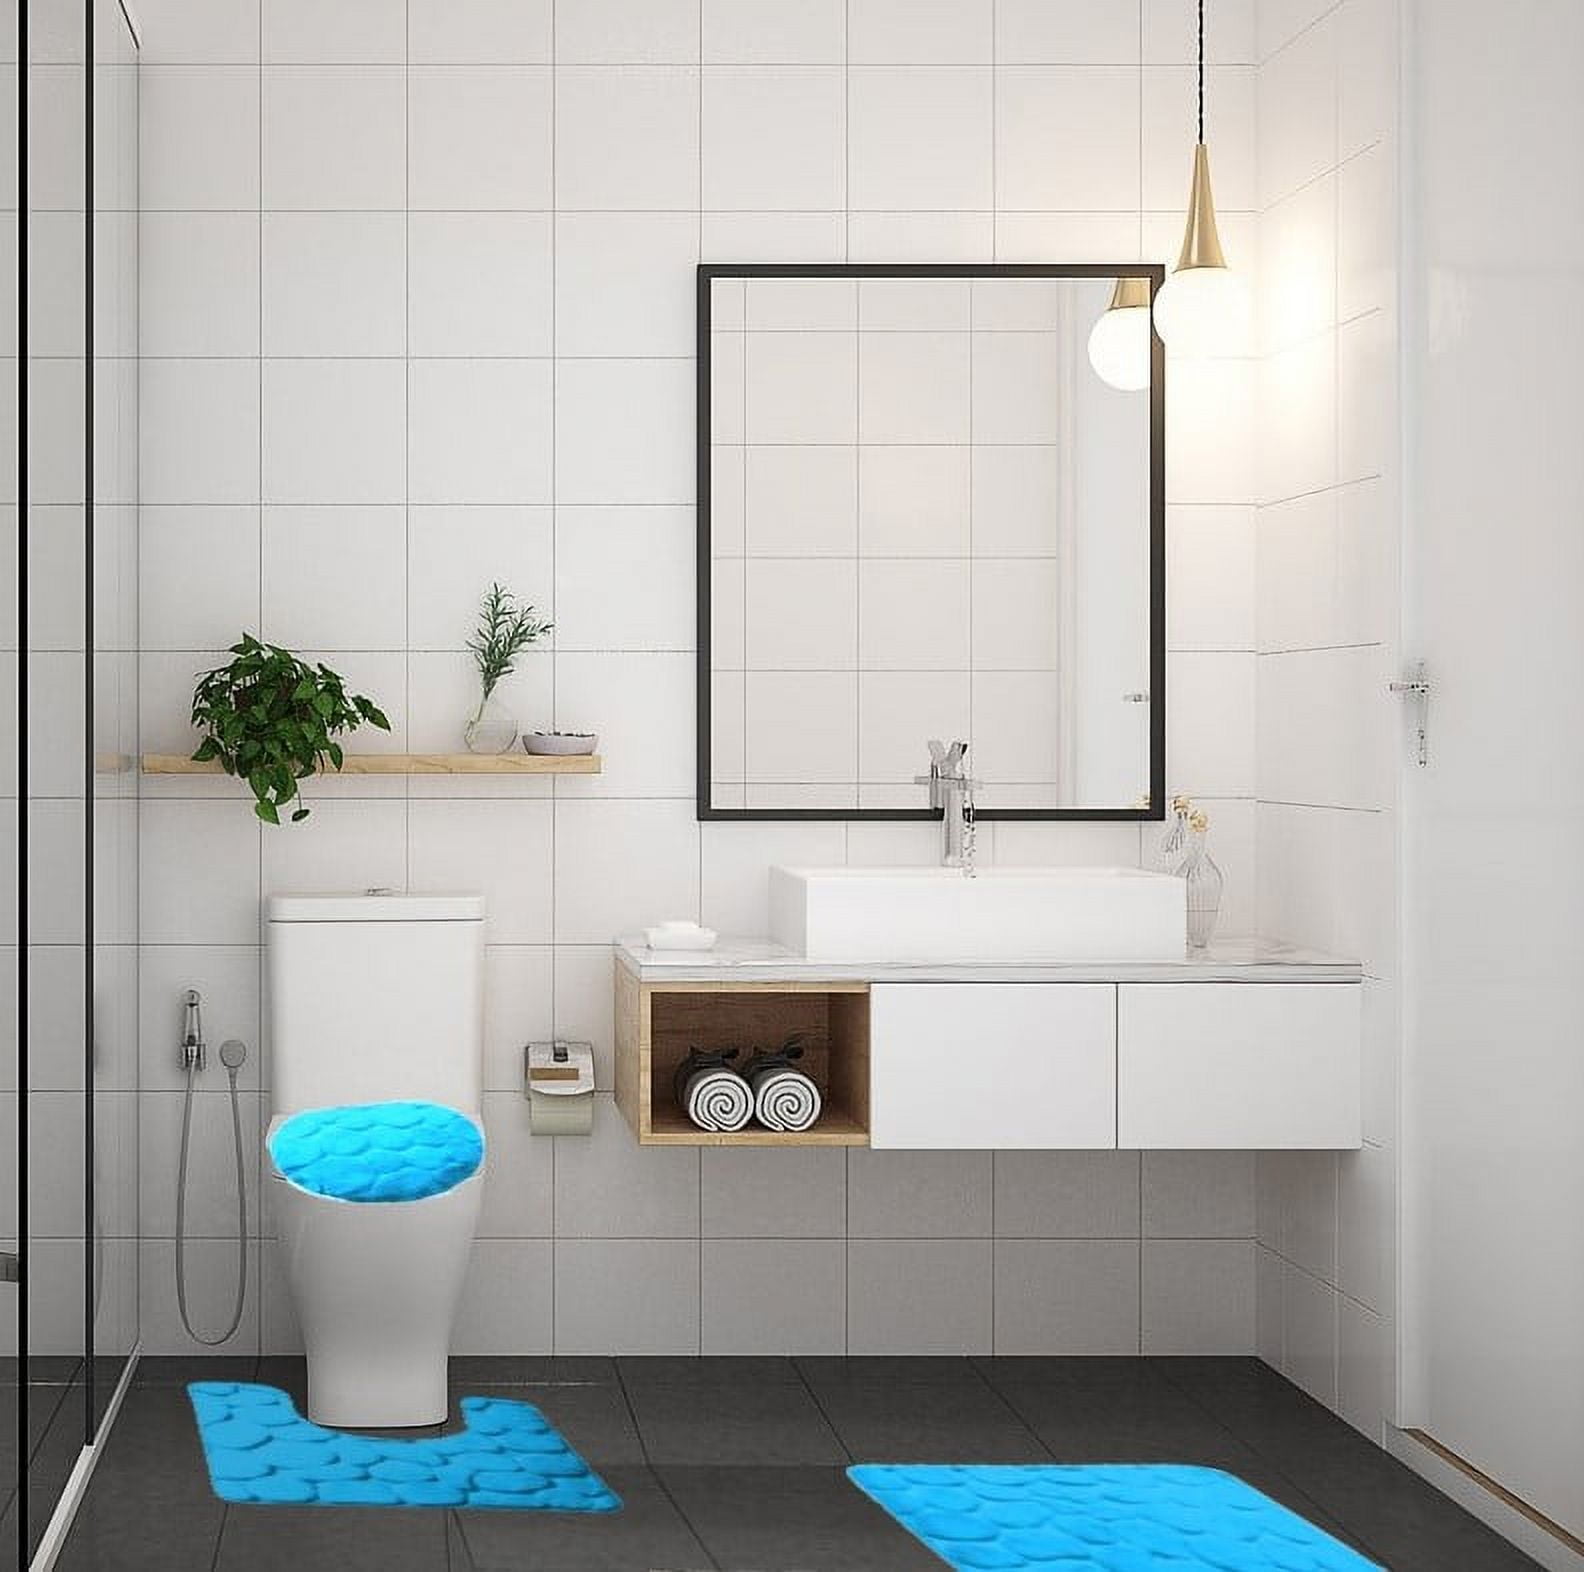 ComfiTime Bathroom Contour Rugs – Thick Memory Foam, Non-Slip Bath